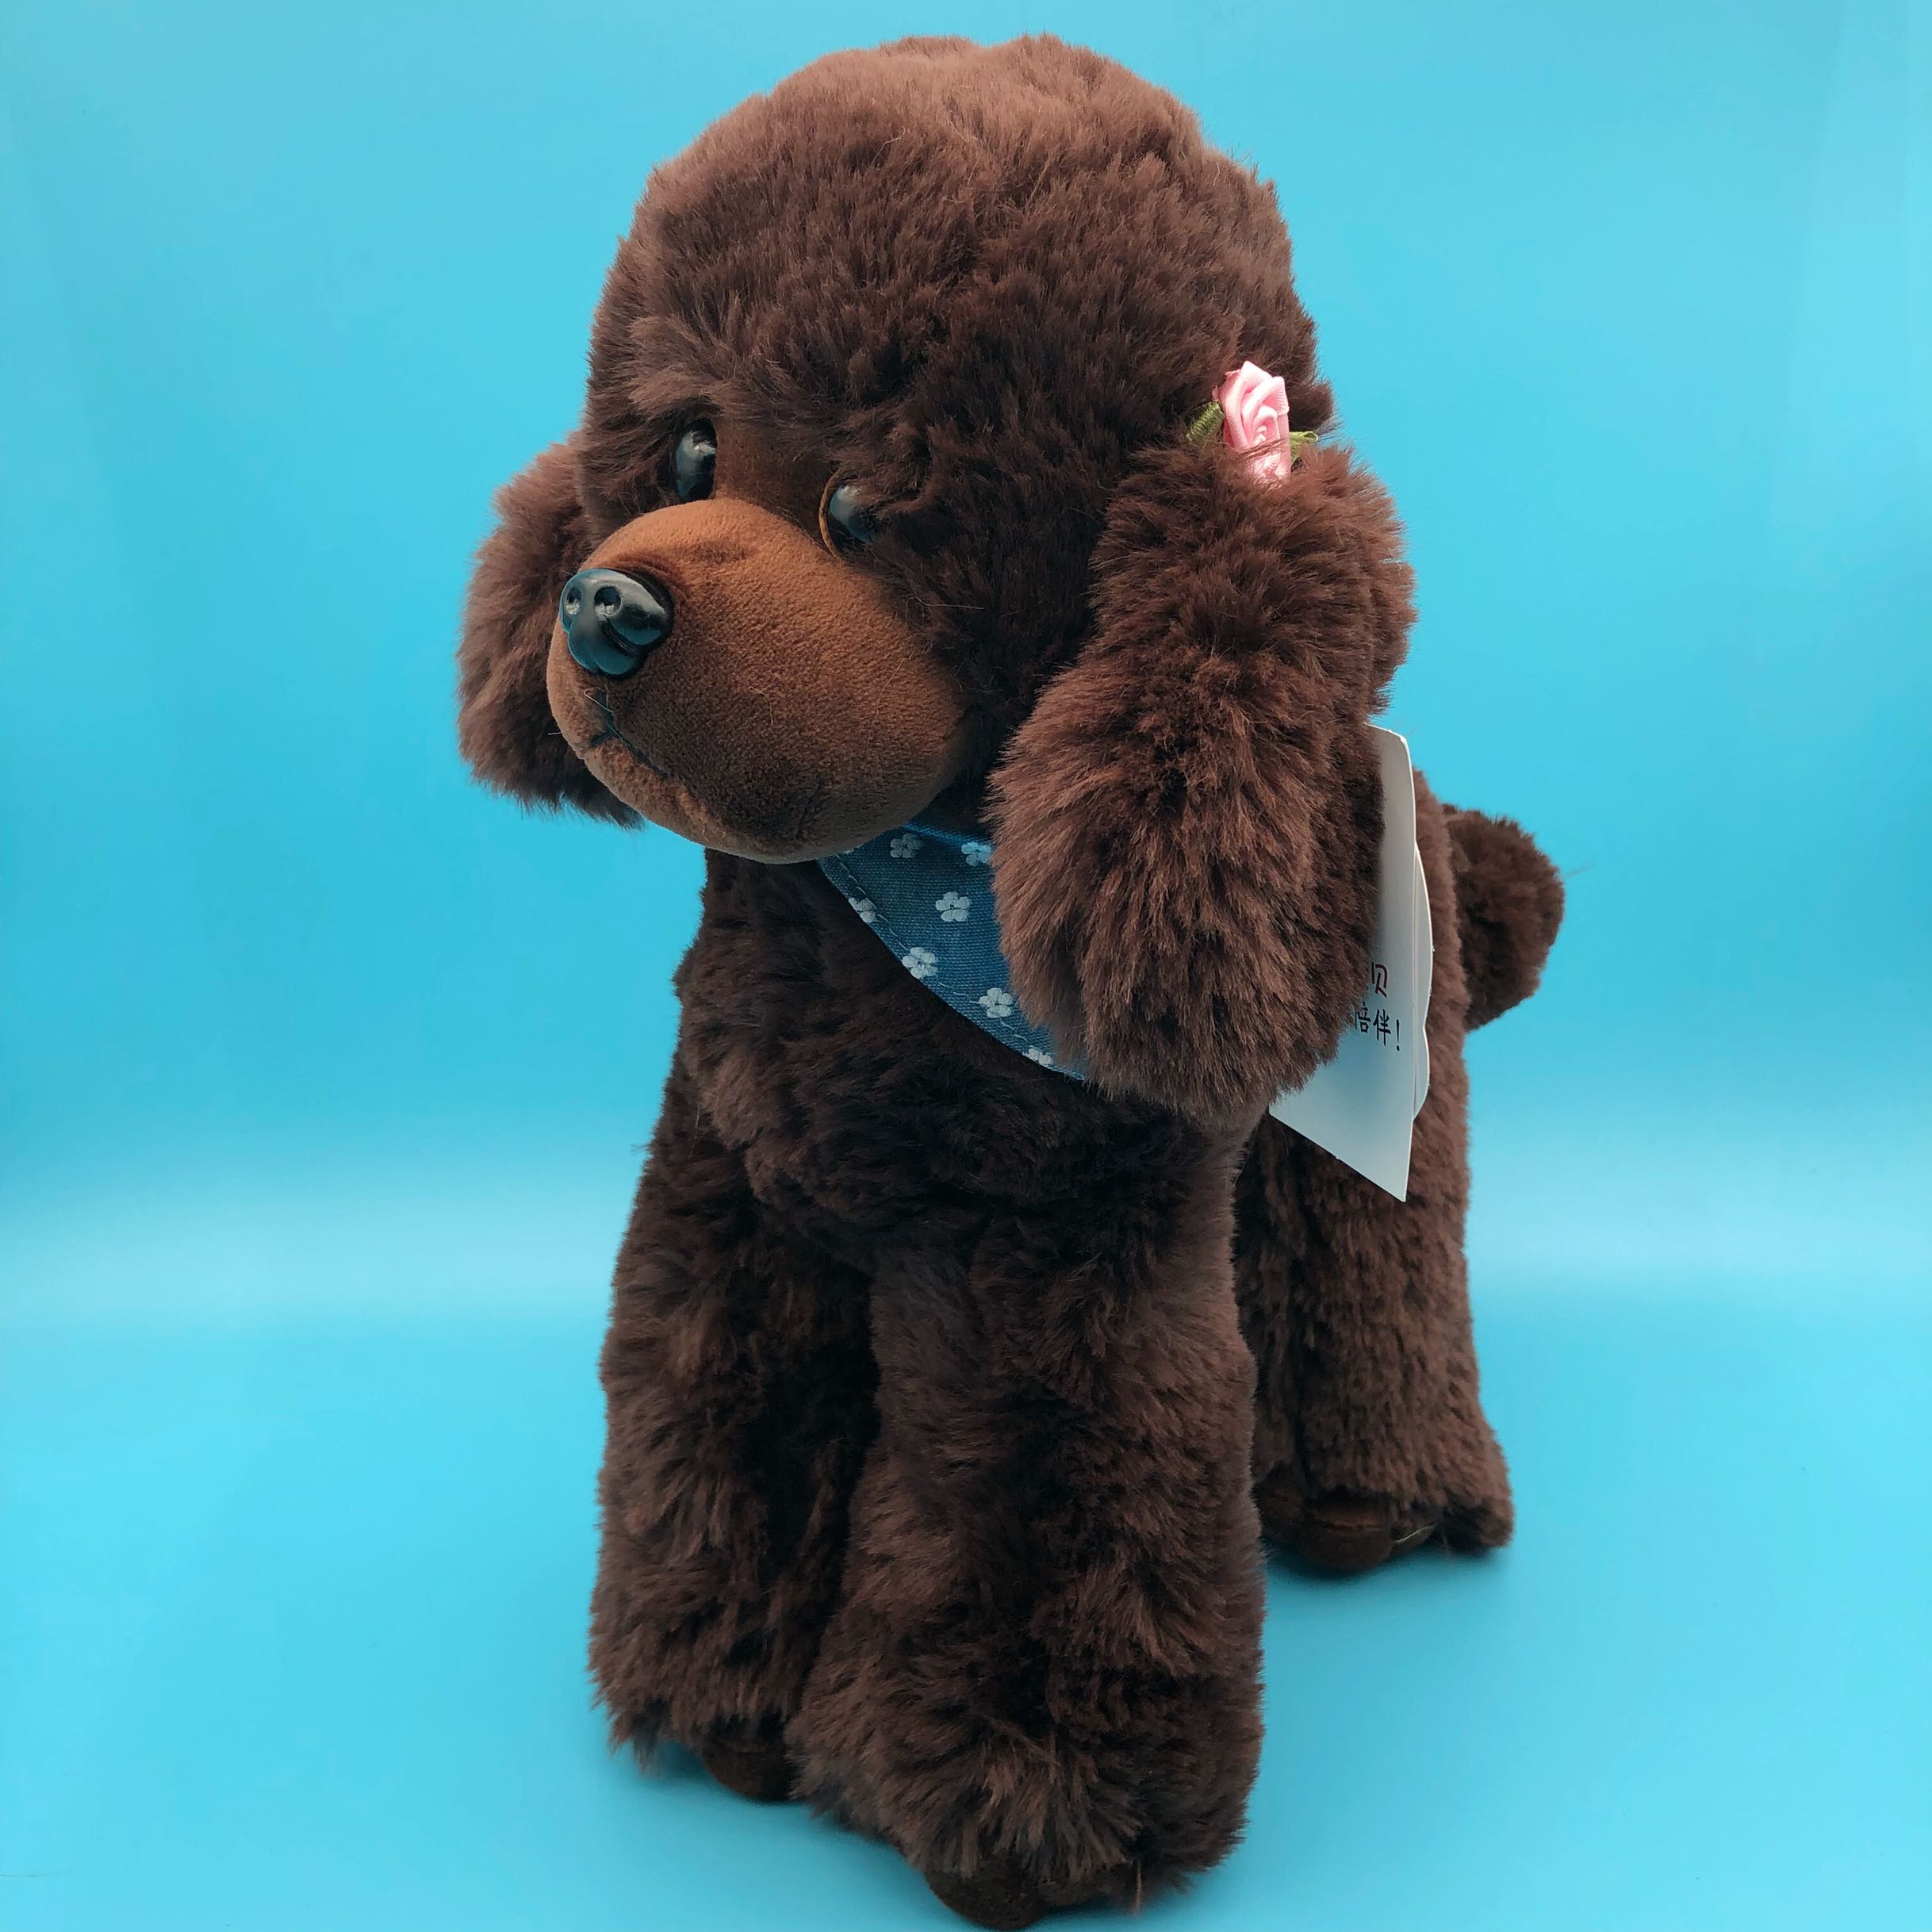 Original Poodle Plush Toy Soft Stuffing Doll Cute Imitation Poodle Teddy Bear Kids Gift